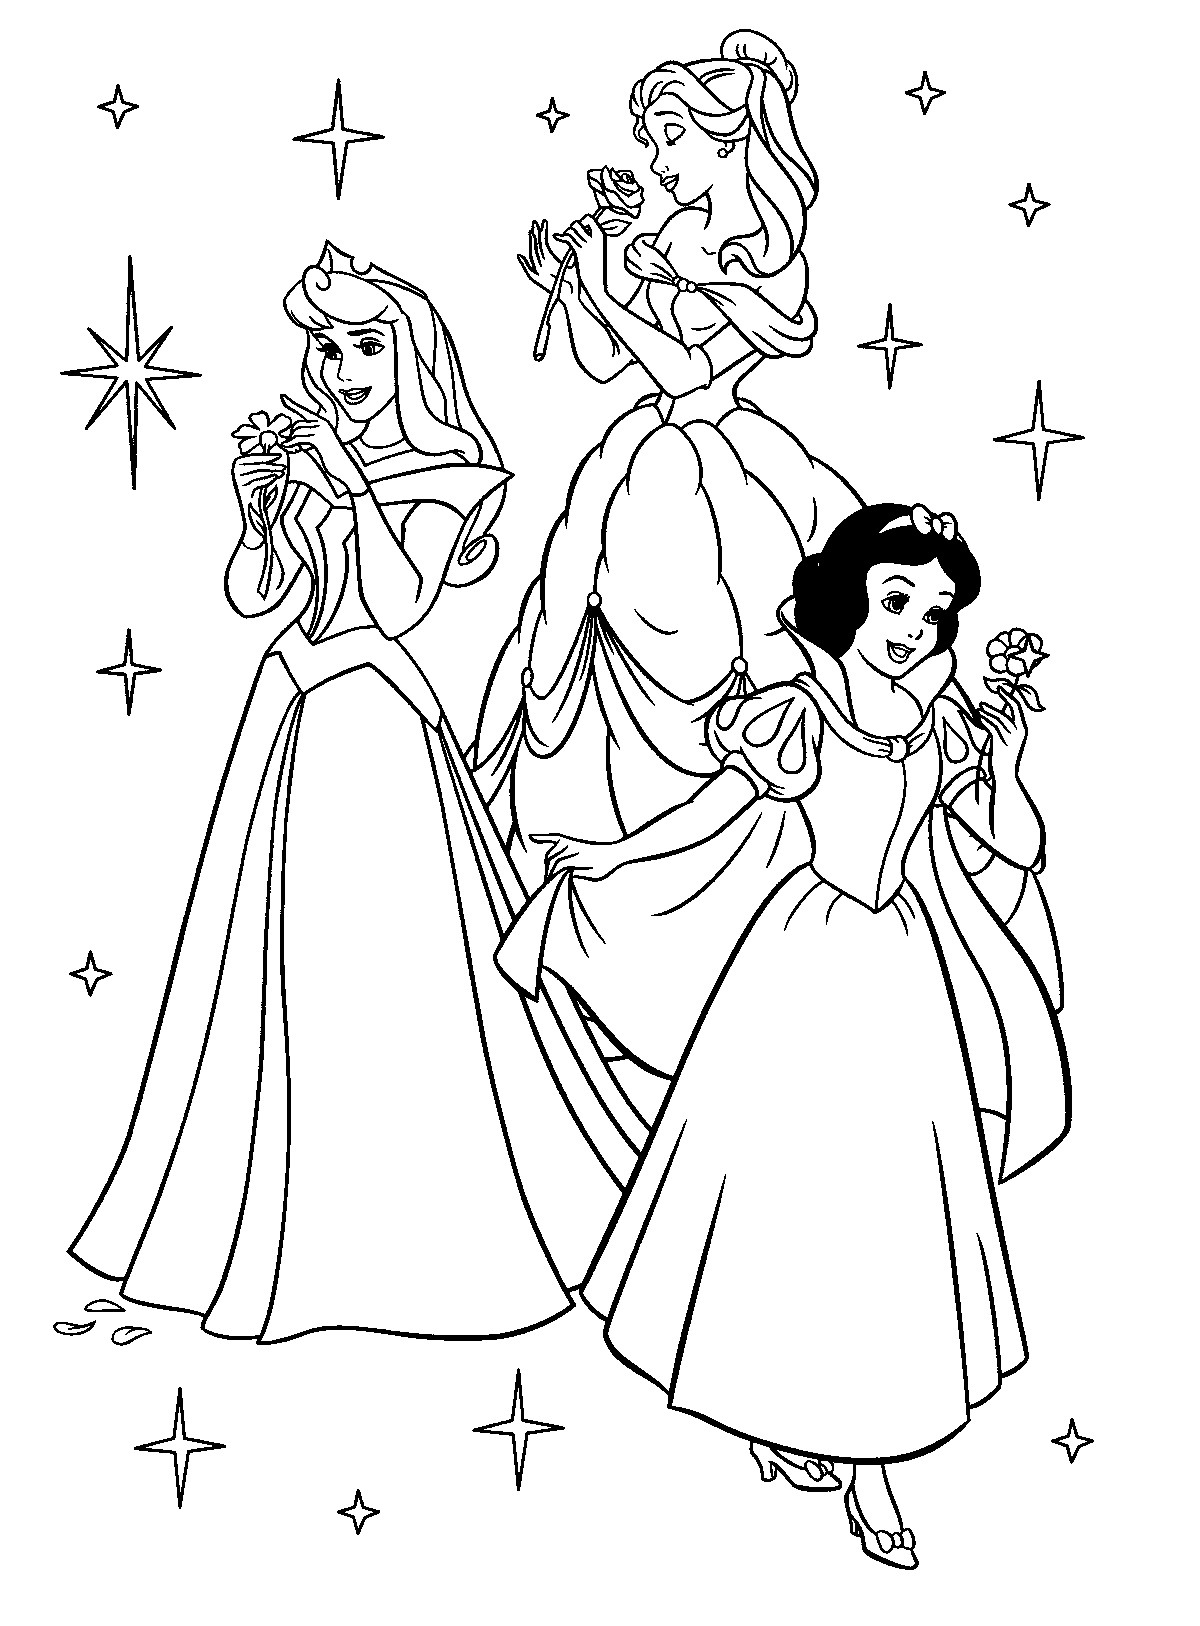 Disney Princess Coloring Pages For Kids
 ディズニー プリンセス 塗り絵 無料～オーロラ・ベル・白雪 子供向けの塗り絵（ぬりえ） テンプレート集